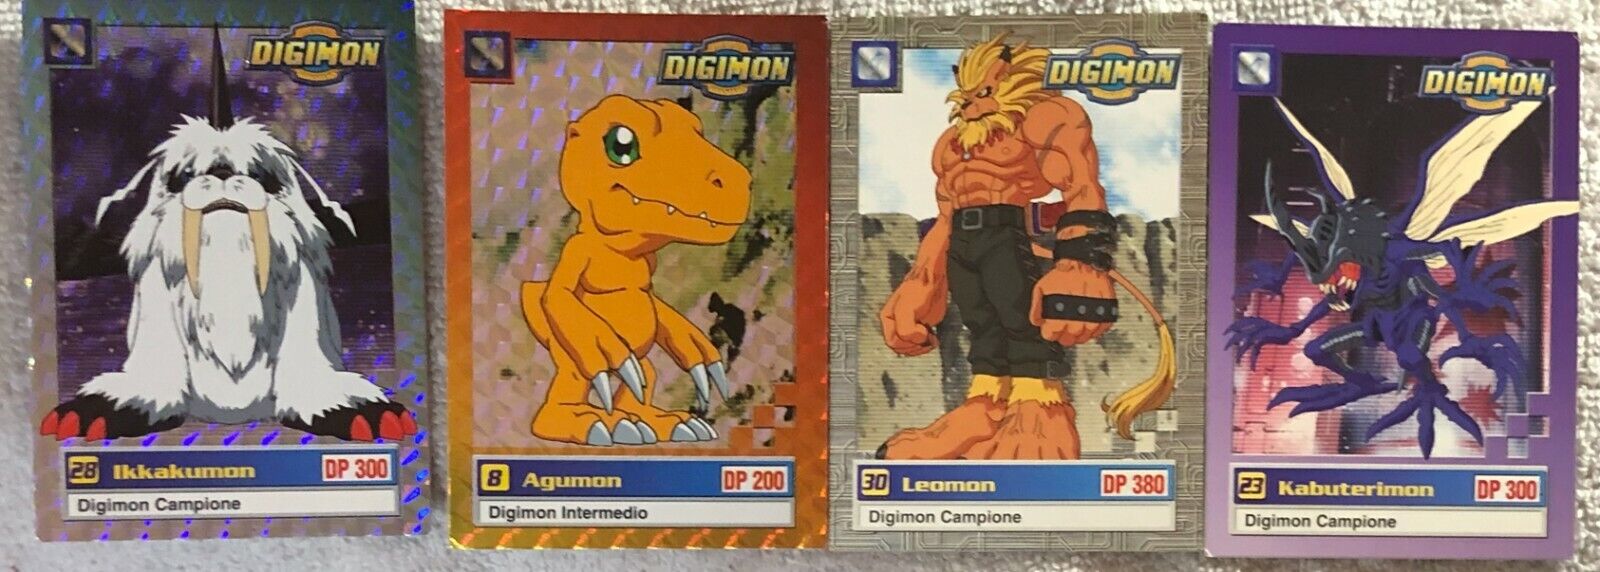 Lotto 5 card Digimon di Aa.vv.,  1999,  Toei Animation